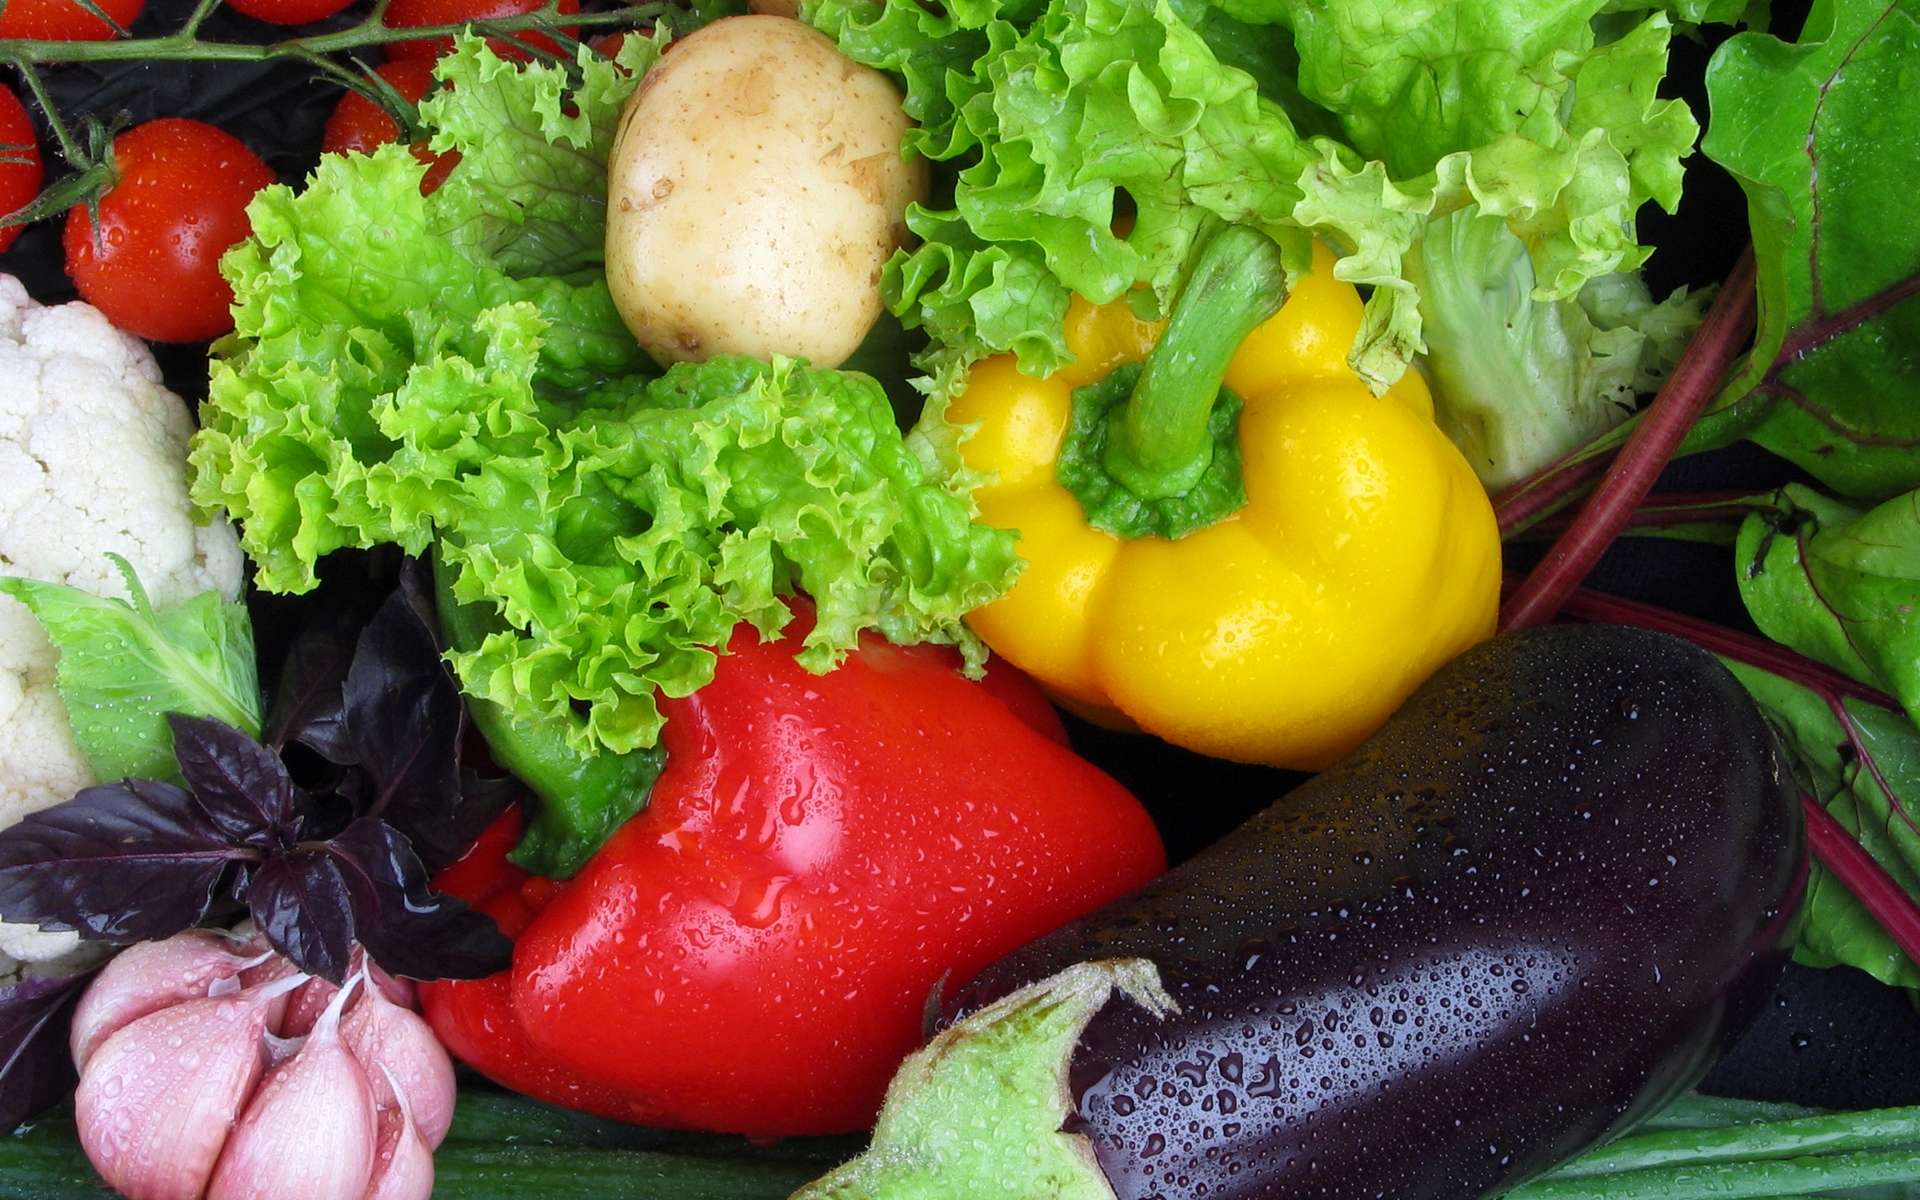 Vegetable products. Овощи. 1.16. Свежие овощи и зелень. Сырые овощи и фрукты.